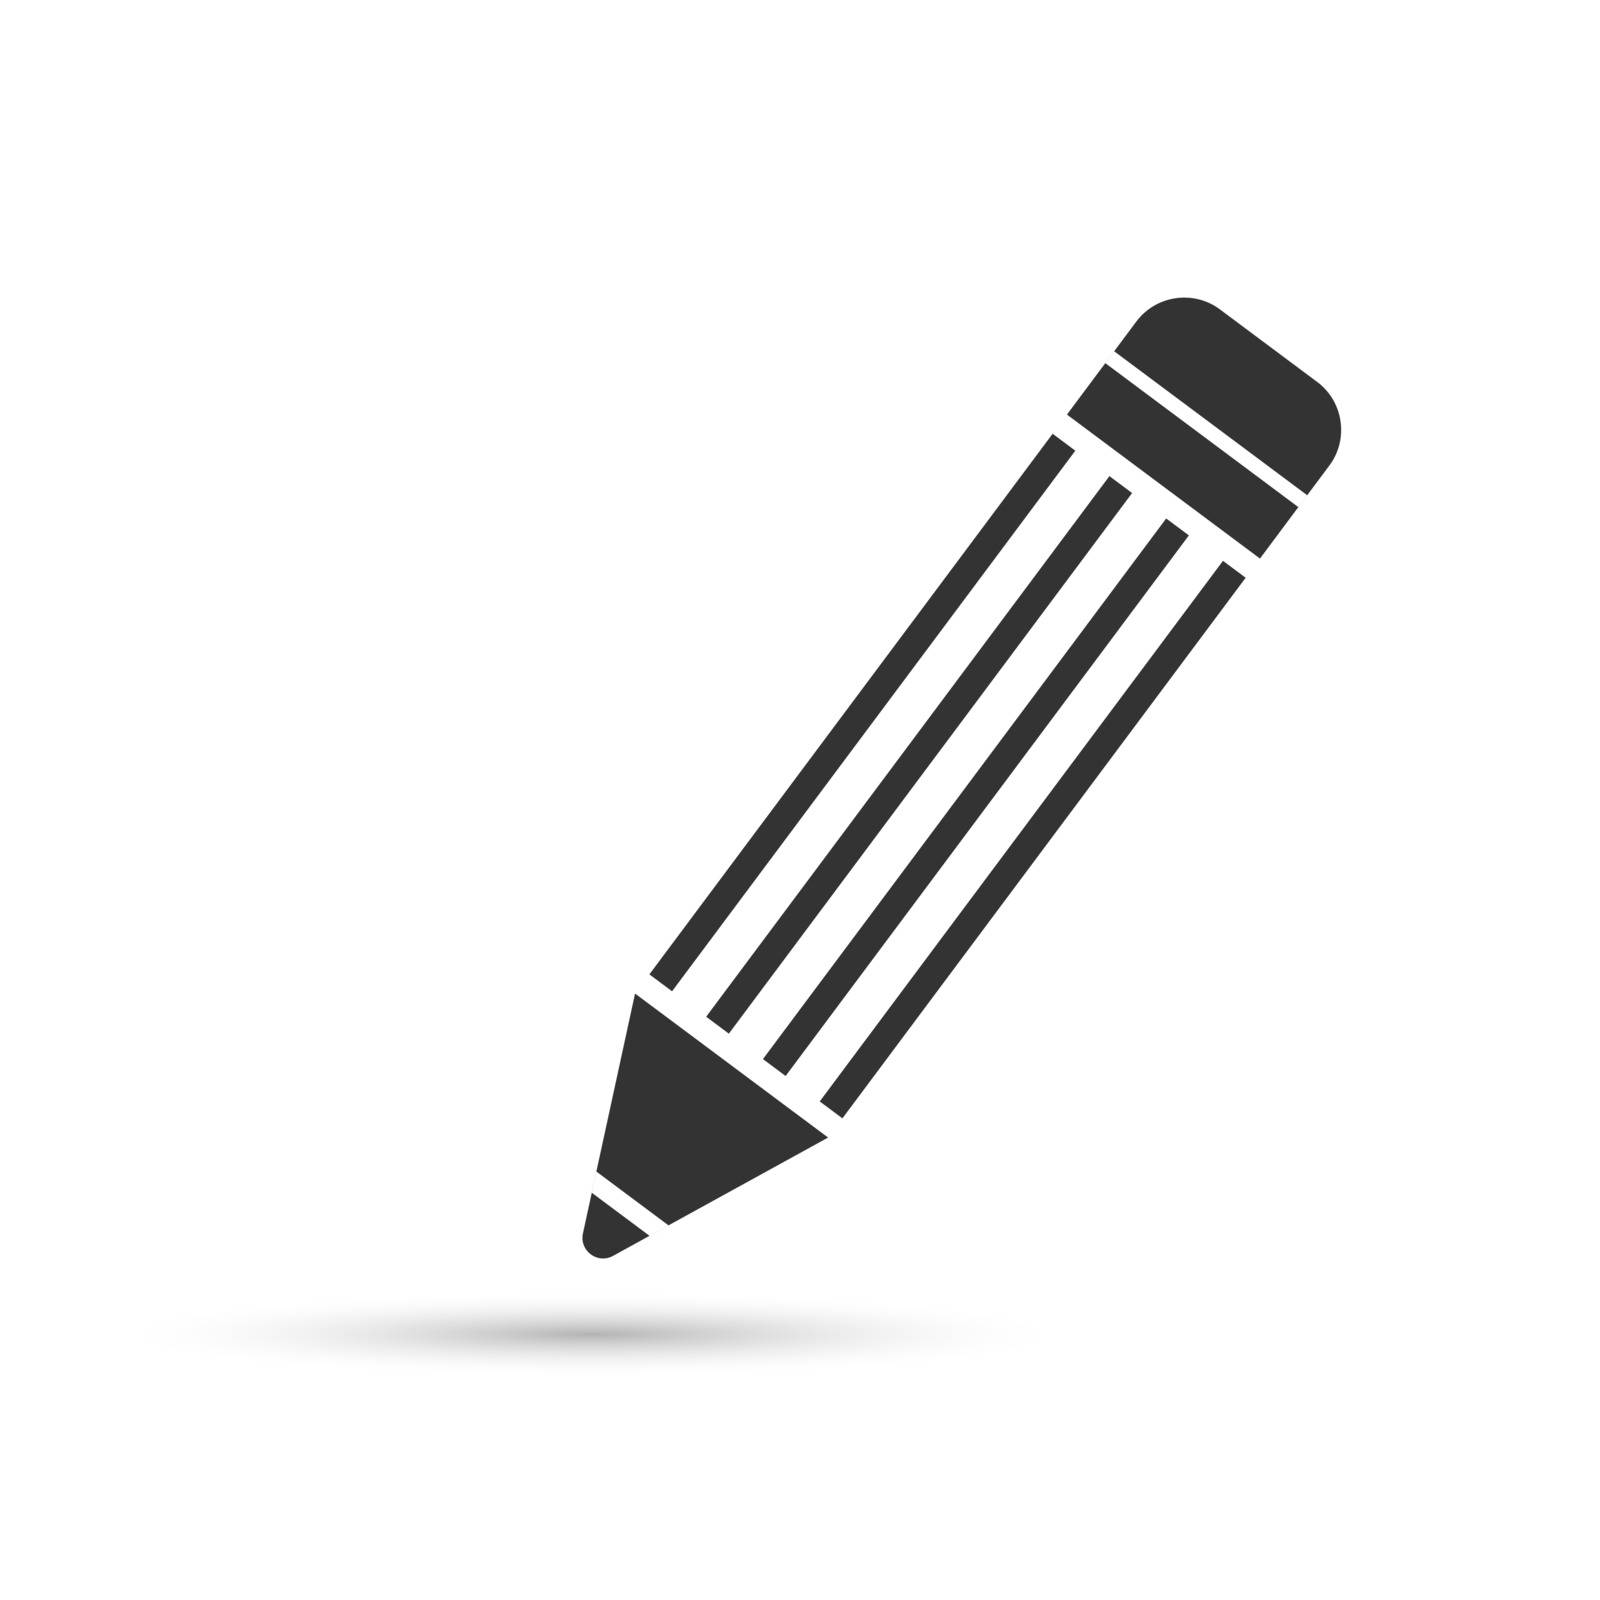 Pencil icon with eraser, flat simple design.
